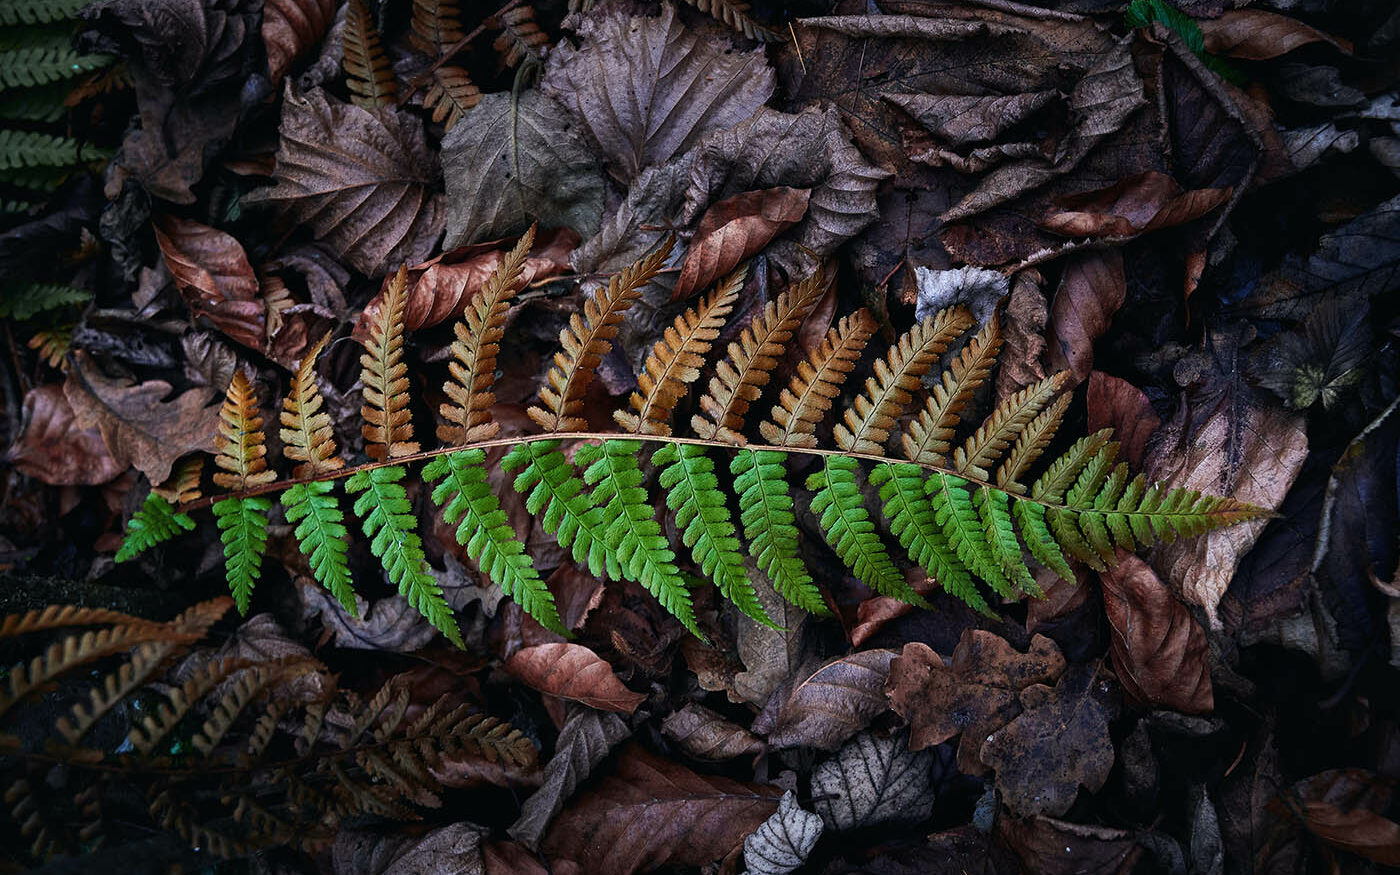 A fern leaf on dead leaves